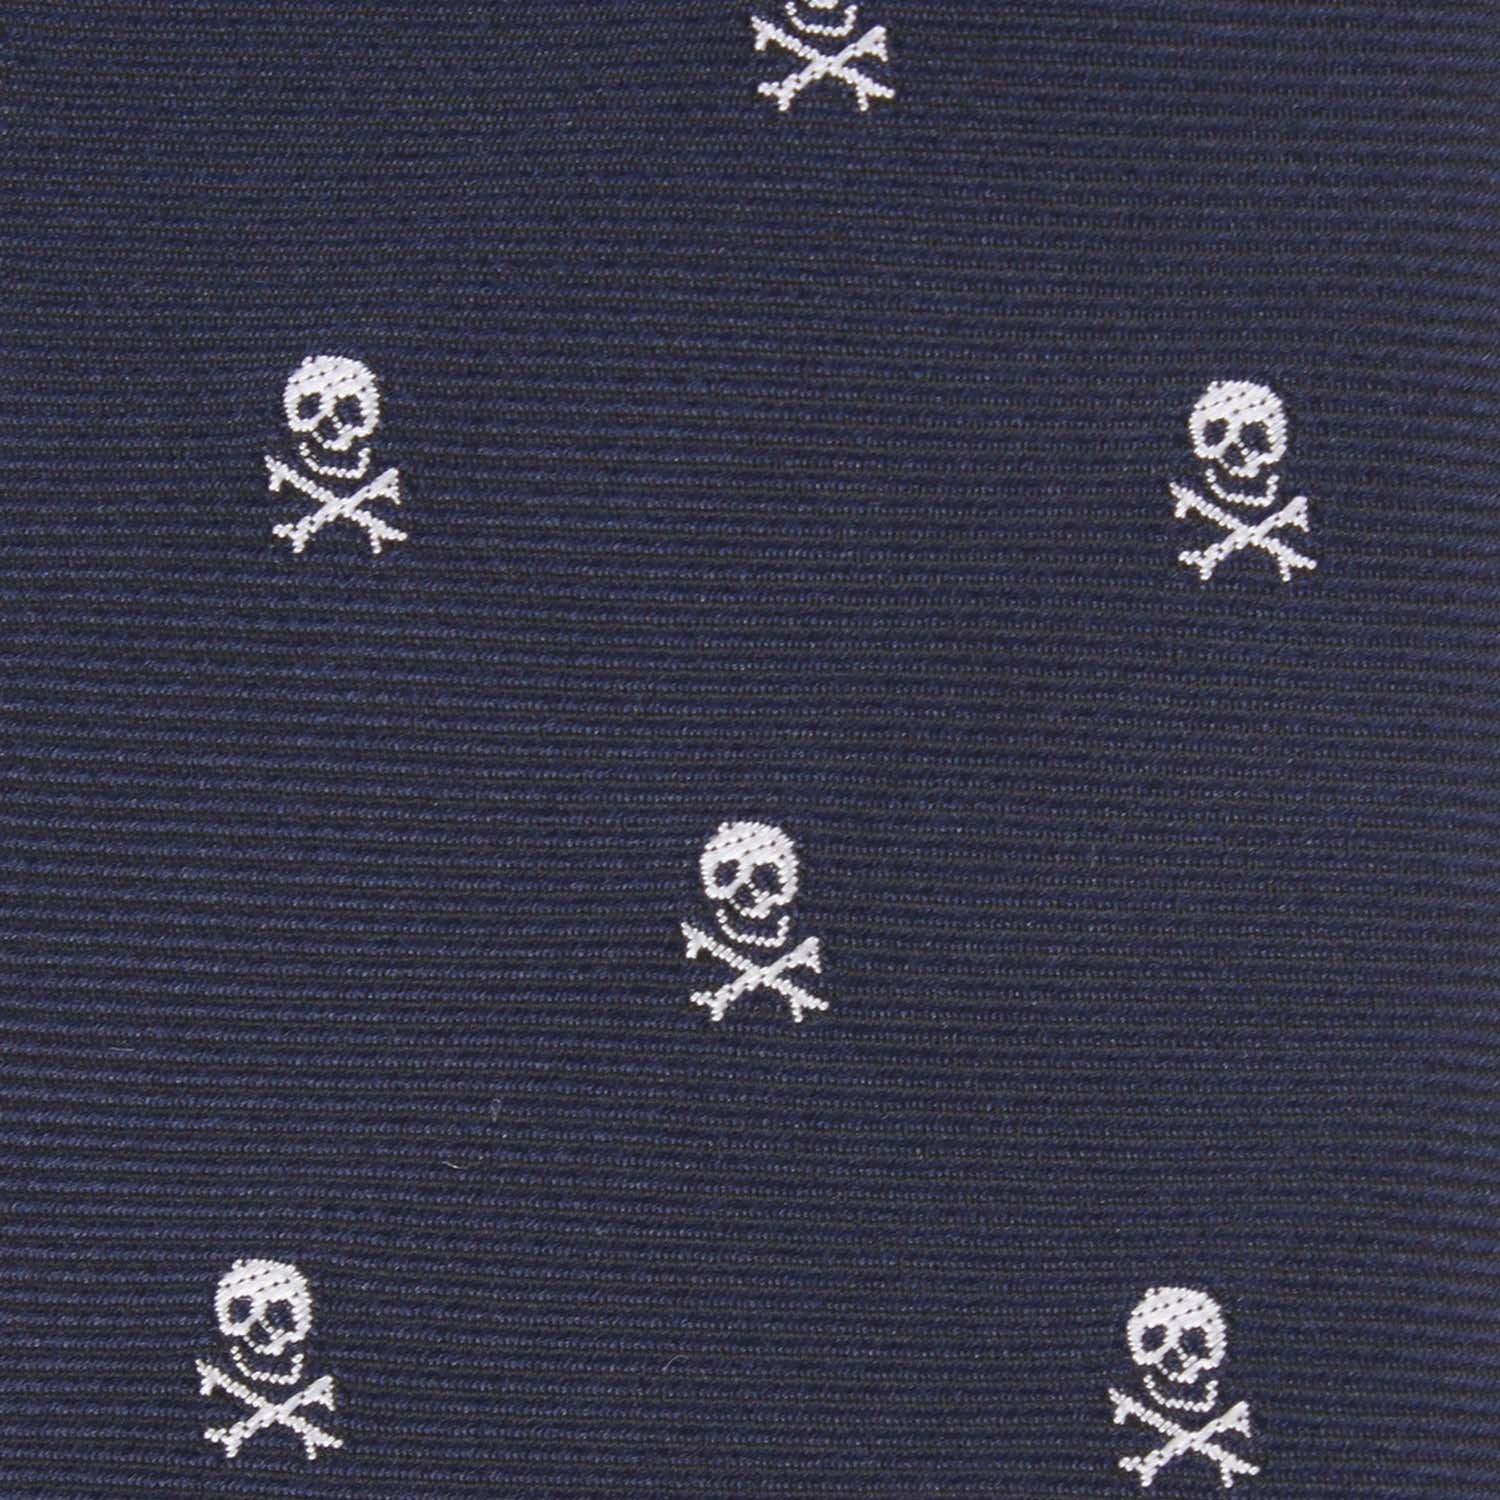 Navy Blue Pirate Skull Fabric Skinny Tie M099